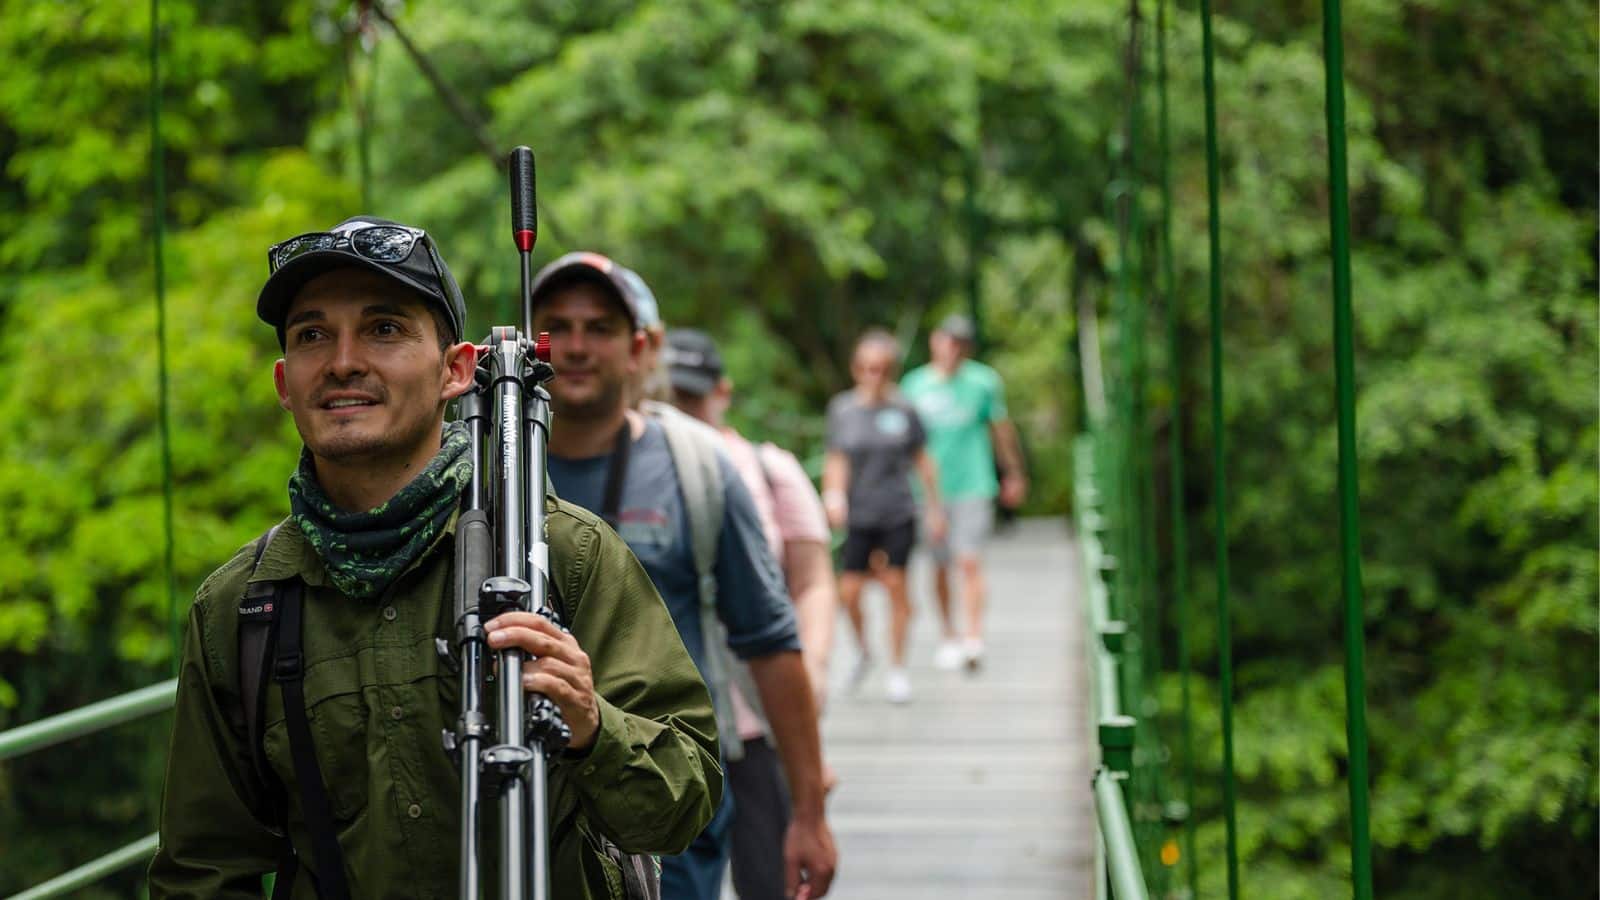 La Selva Biological Station and Reserve in Costa Rica (Photo: Steven Diaz)